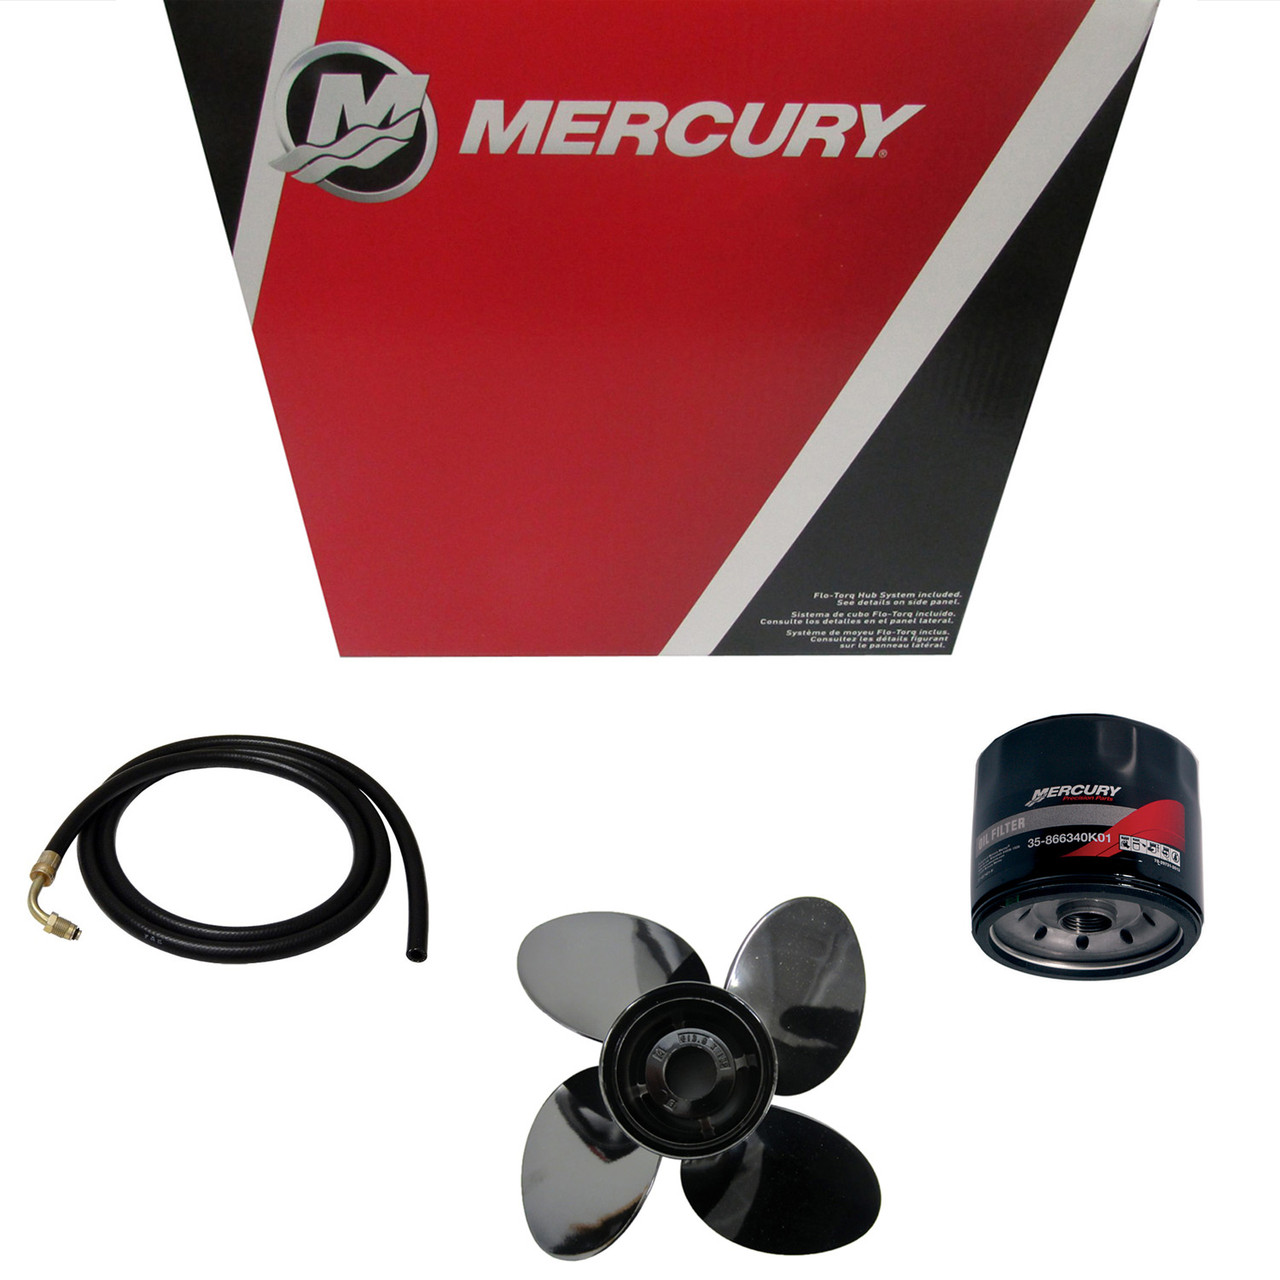 Mercury Marine / Mercruiser New OEM Sound Blanket Kit, 823583A02